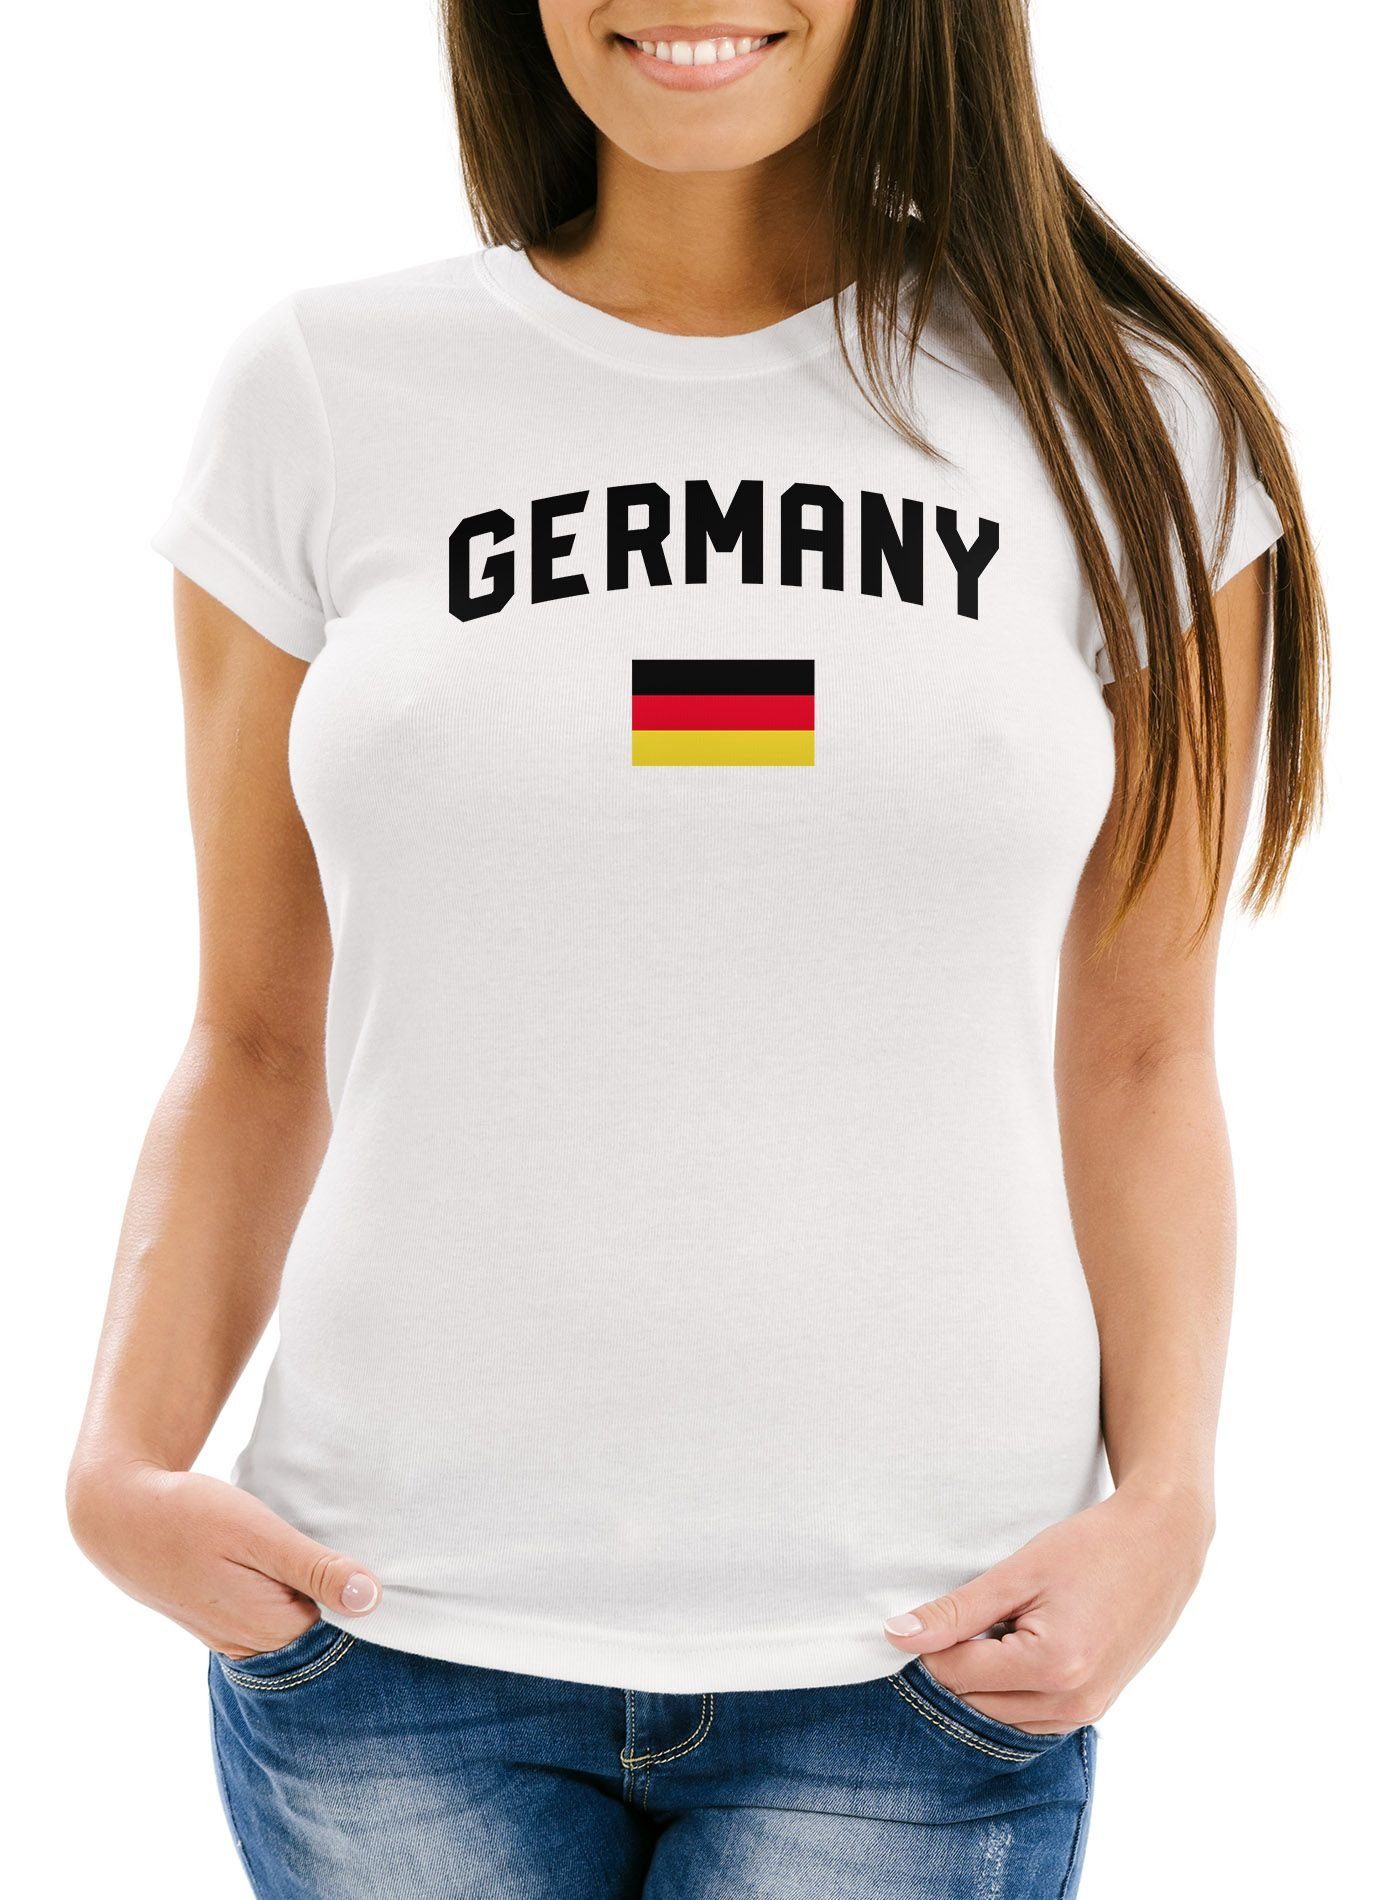 Fußball Trikot Deutschland WM 2018 Fan Shirt 